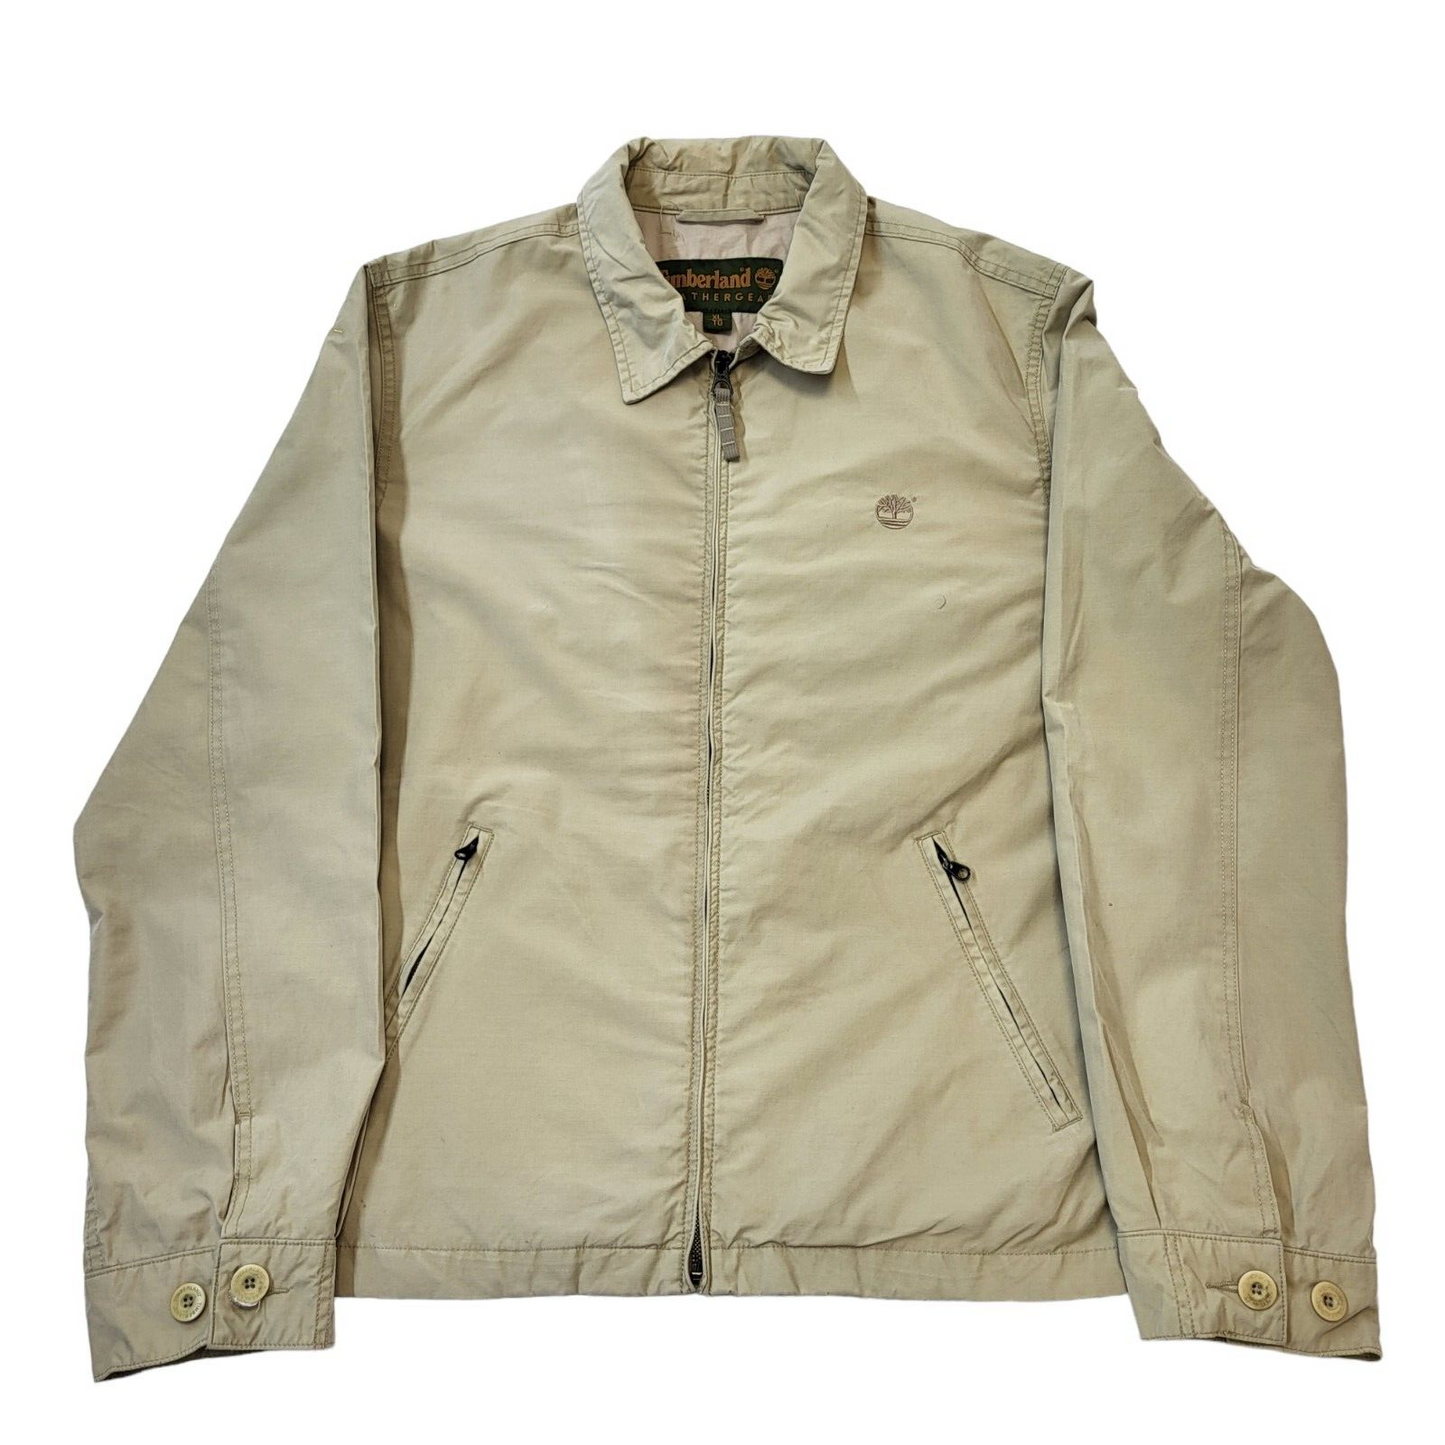 Timberland Jacket (XL)